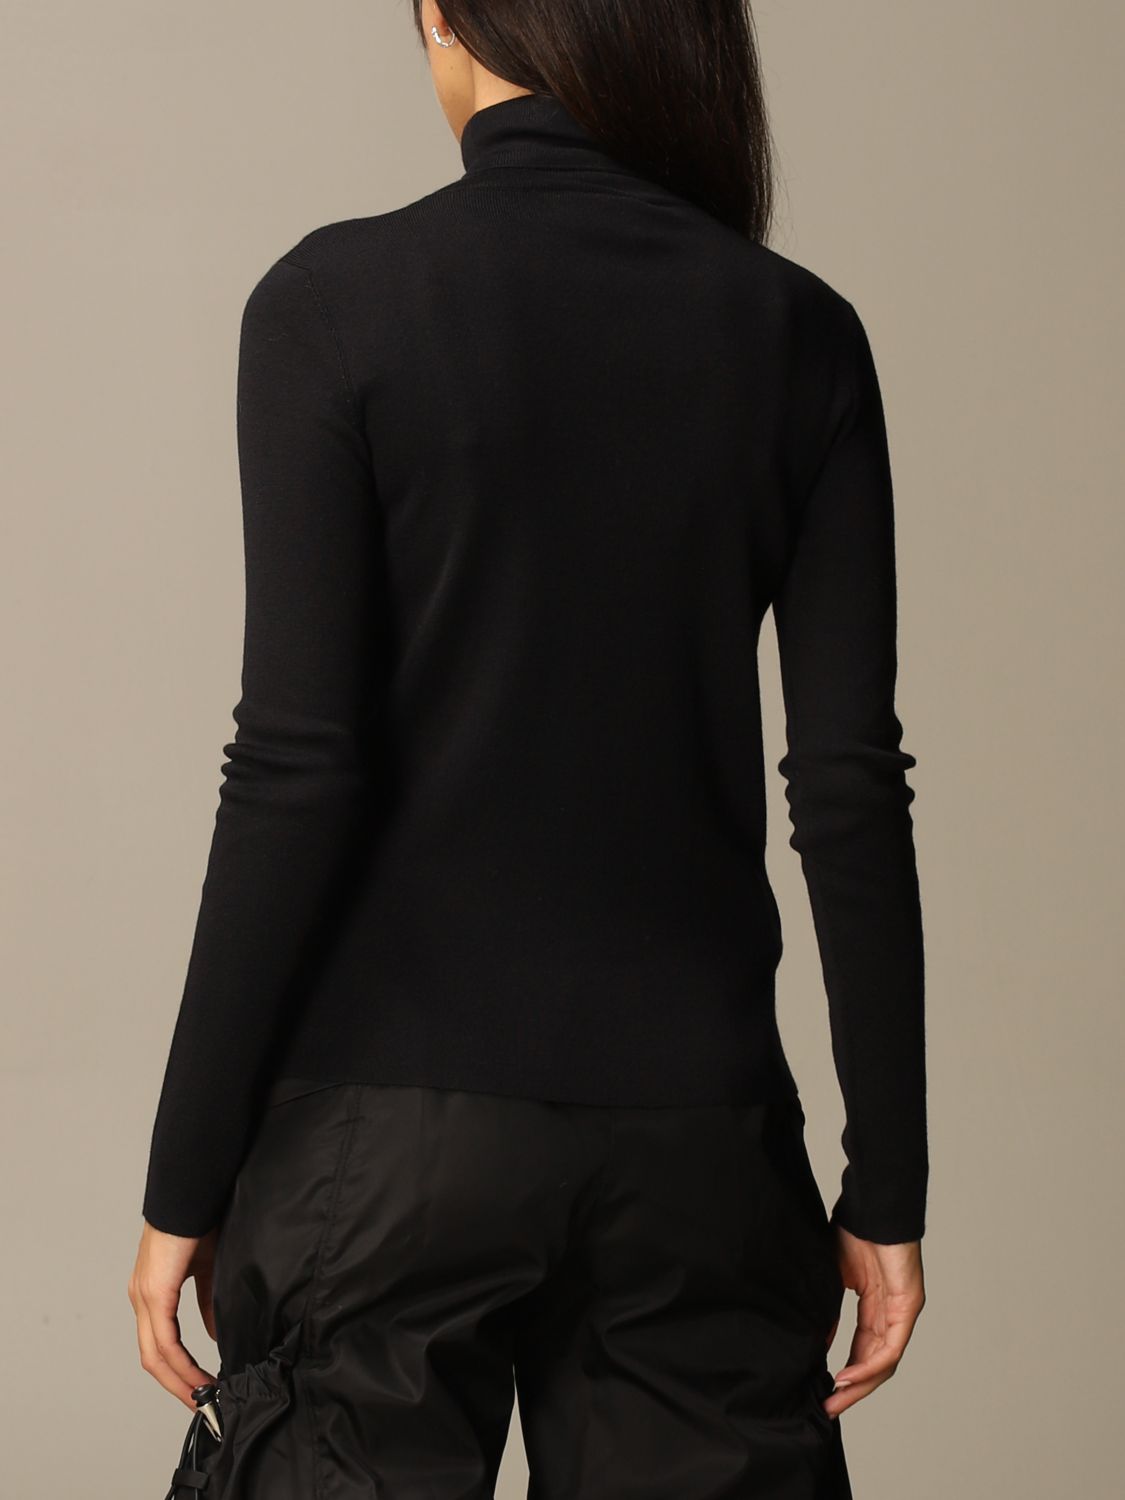 PRADA: basic long-sleeved turtleneck - Black | Sweater Prada P26183 40J ...